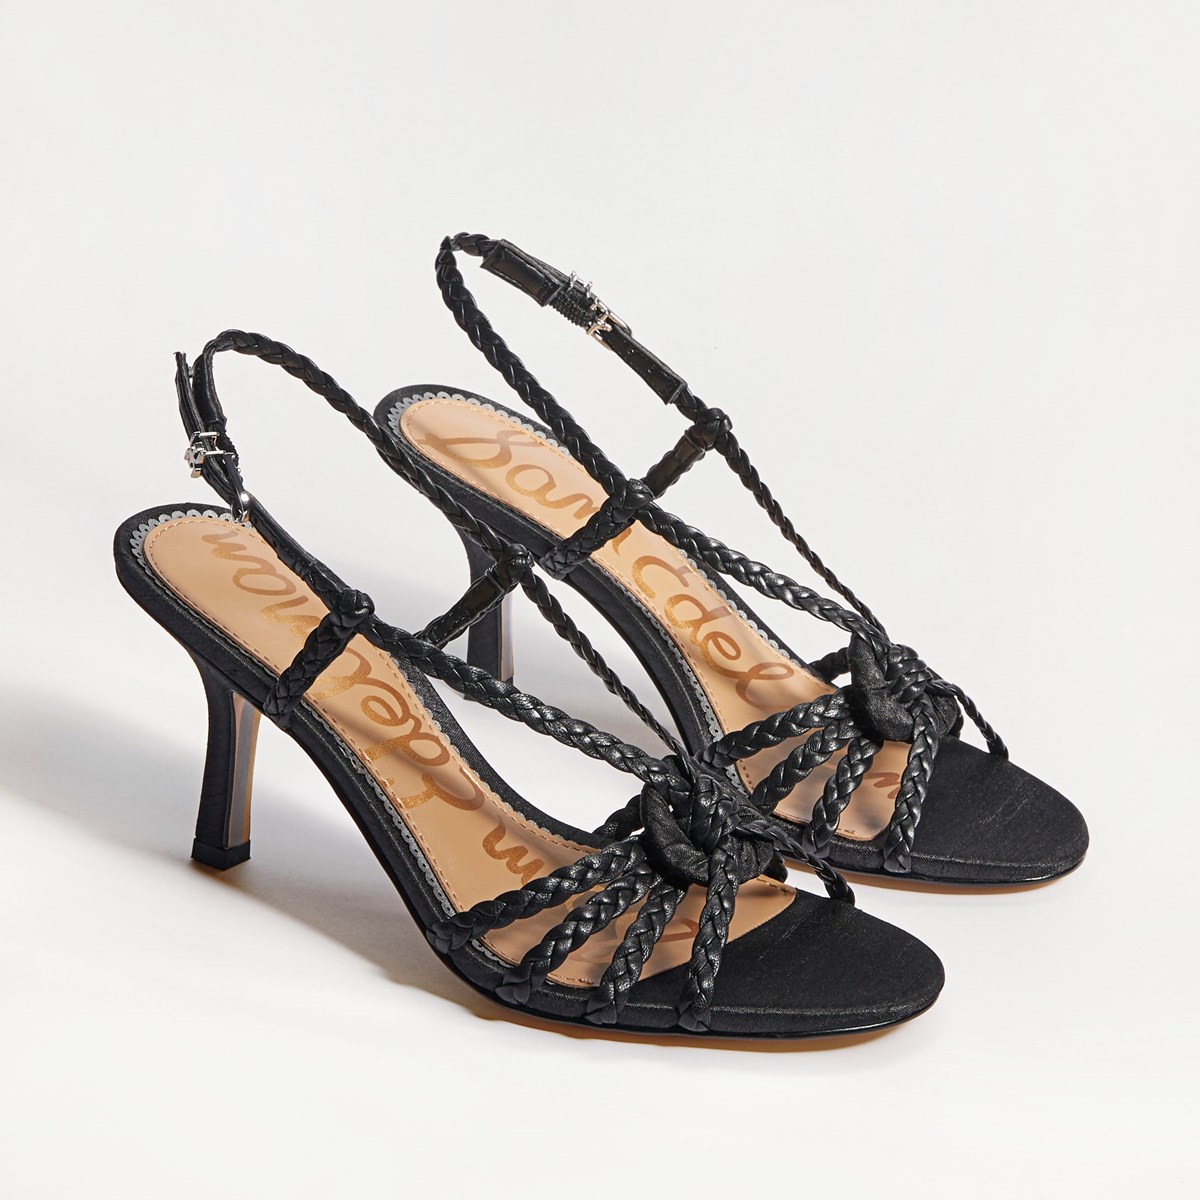 Buy > braided strap heel > in stock